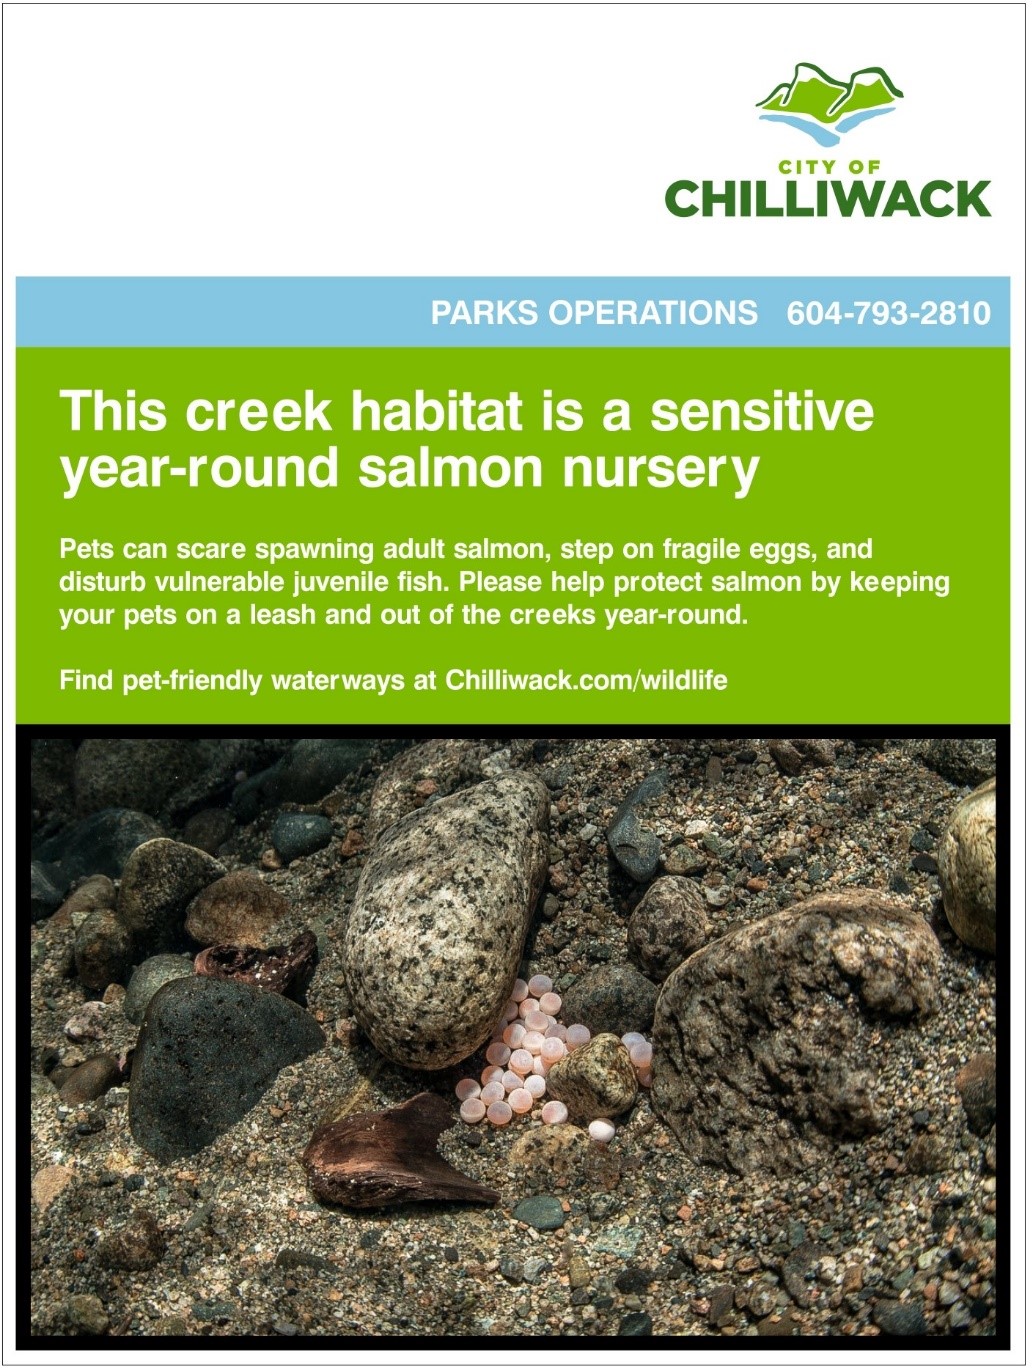 Informational signage posted around sensitive salmon habitats in Chilliwack.